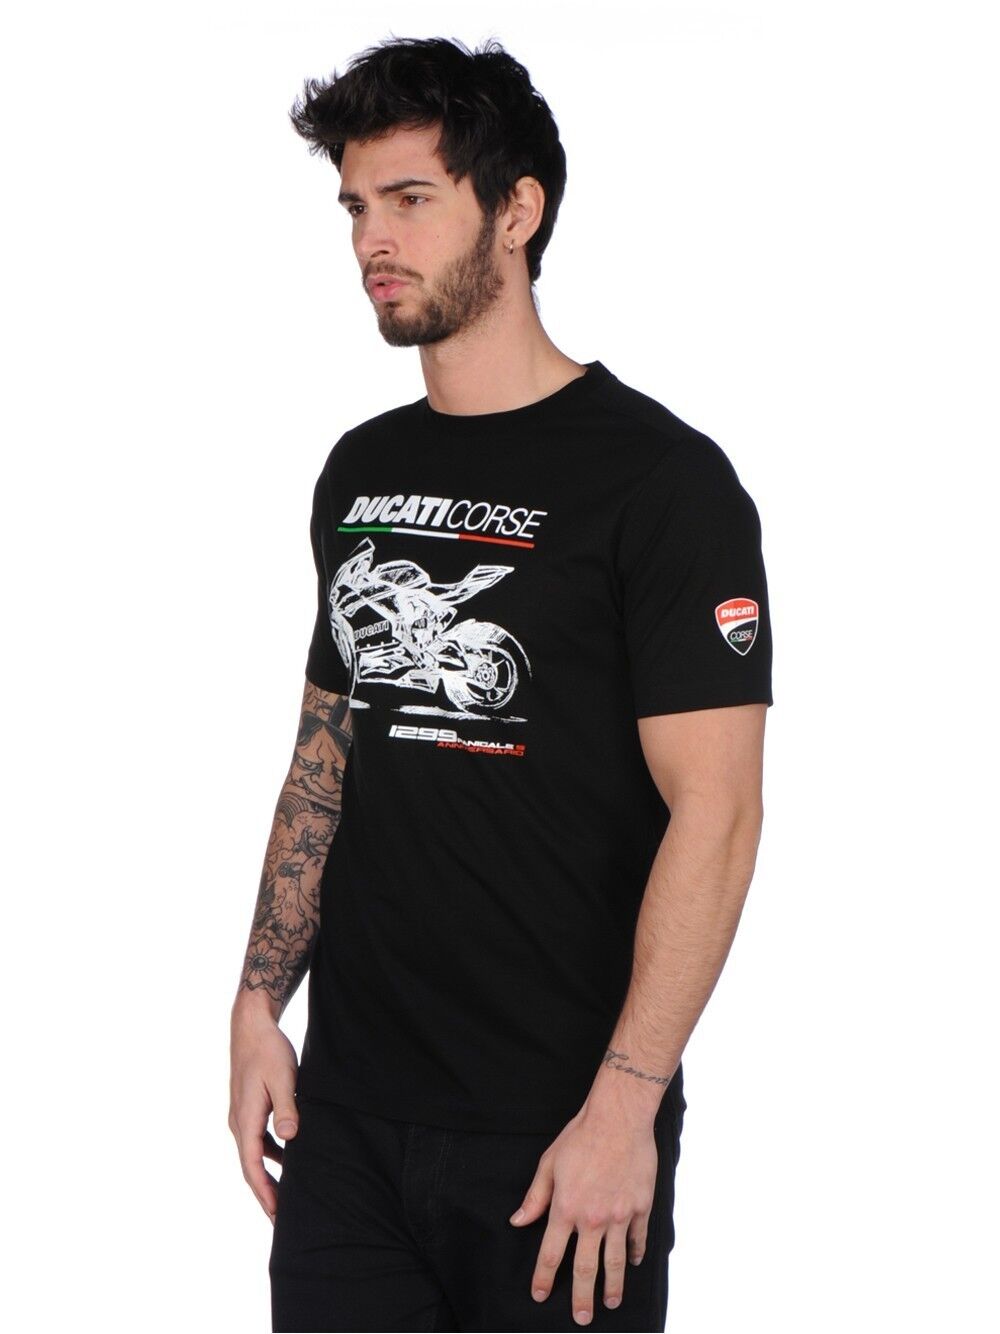 Official Ducati Corse Black Photo T'shirt - 17 36007